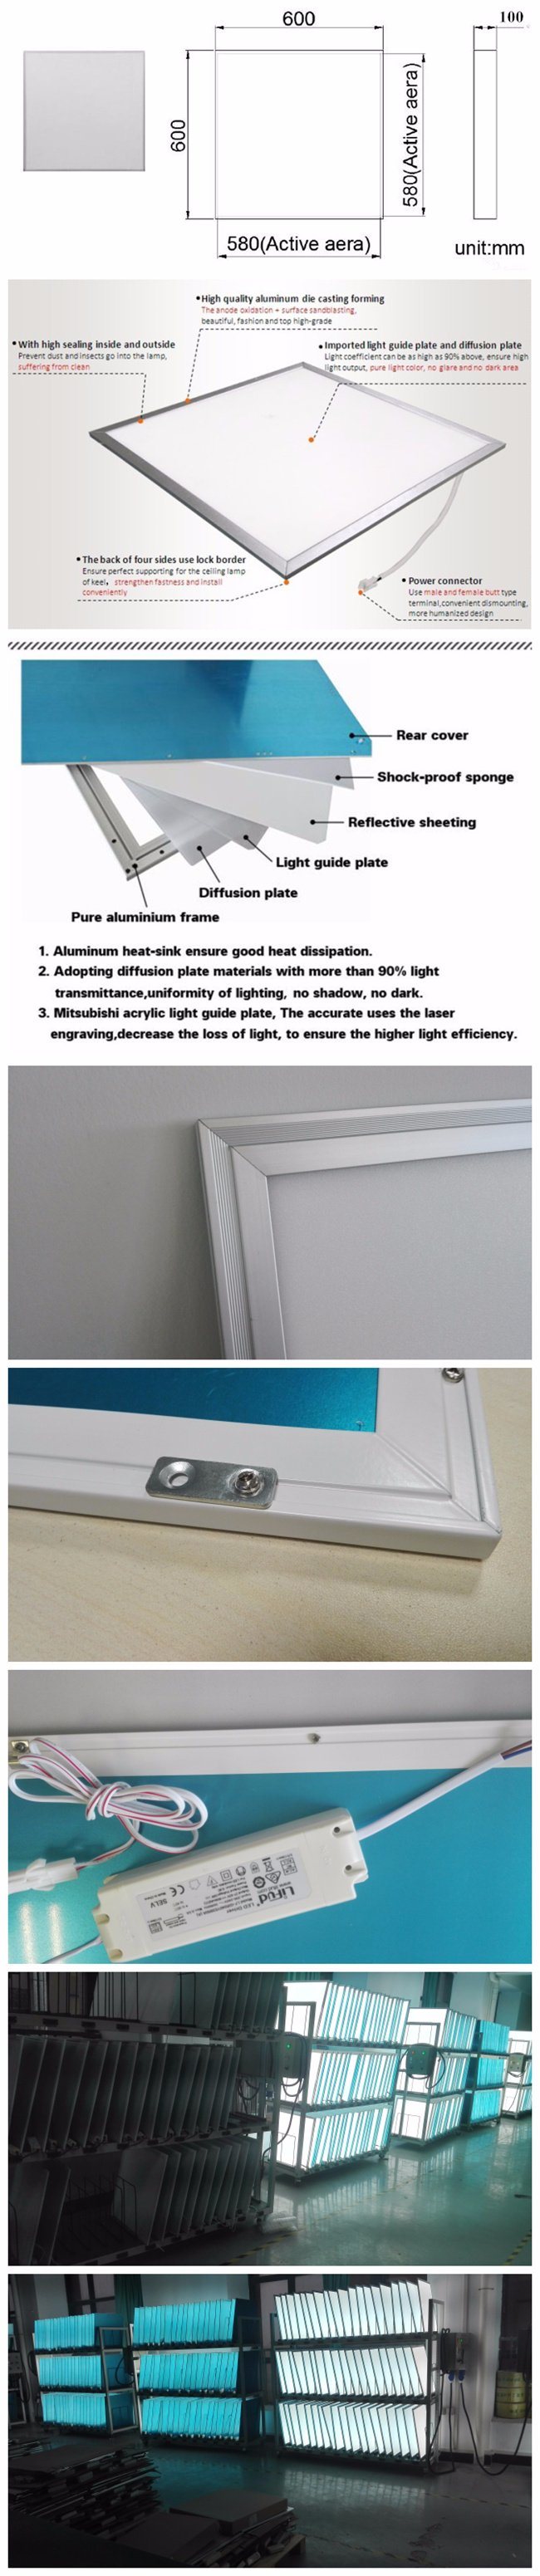 Surface Mounted 600X600 Square LED Panel Lamp